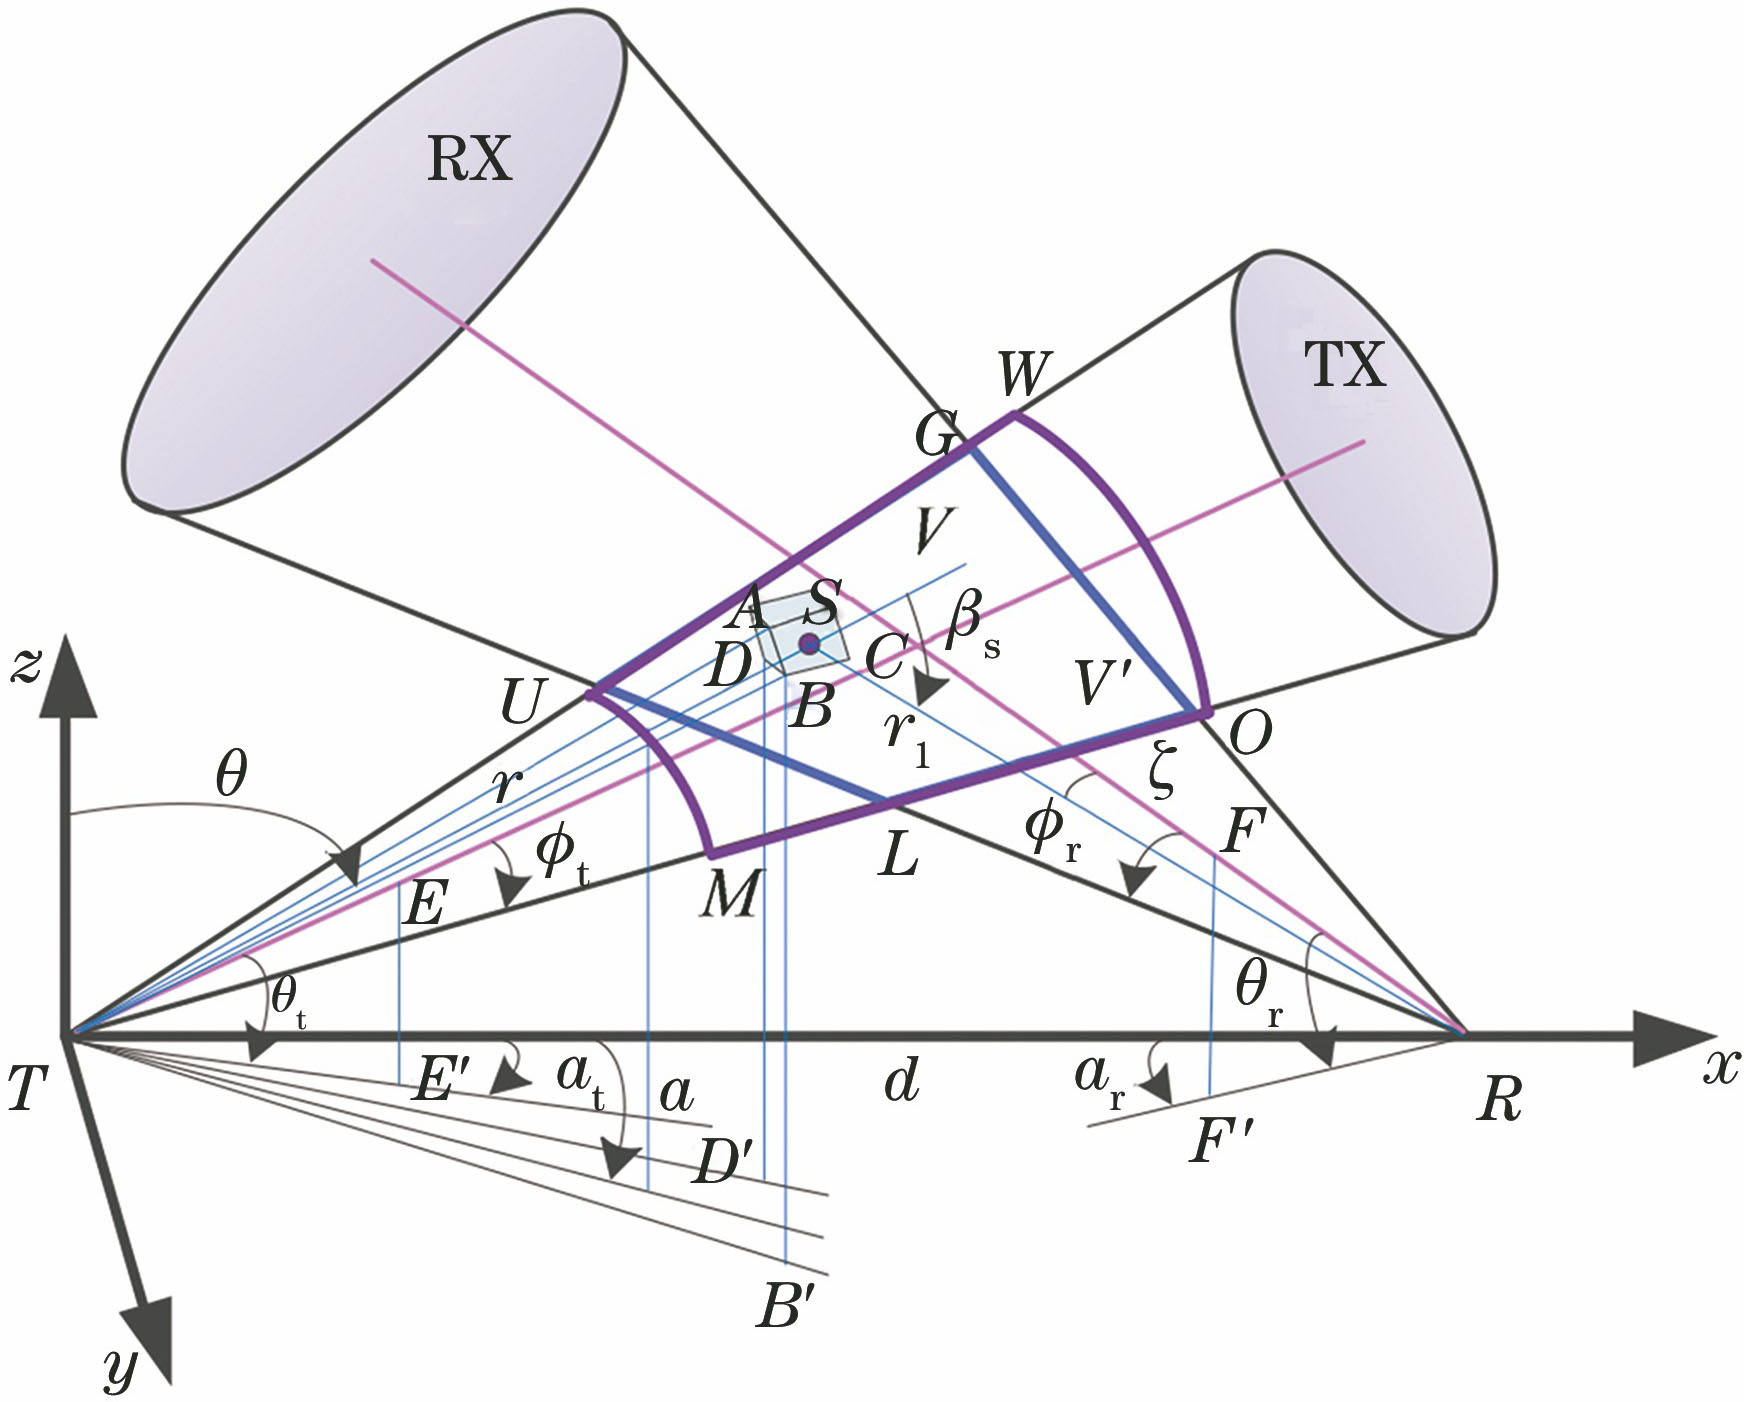 NLOS UV single-scatter propagation model in non-coplanar geometry